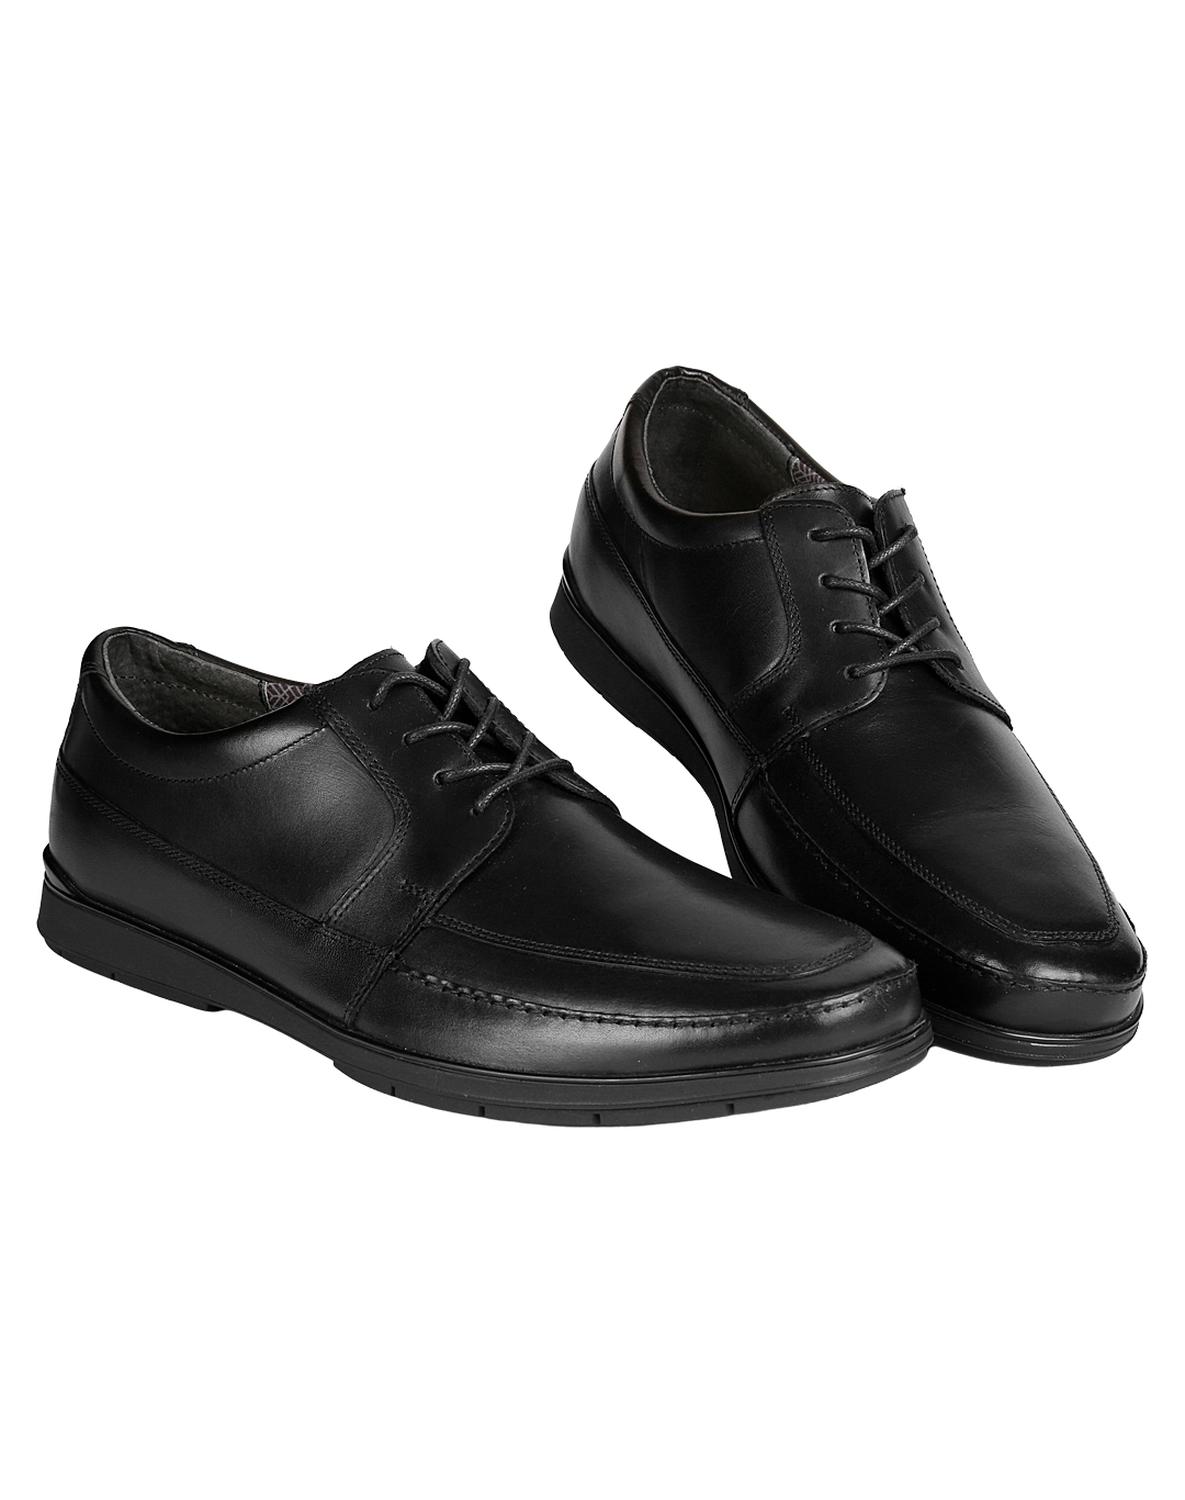 Zapato Vestir Oxford Hombre Negro Piel Flexi 02503831